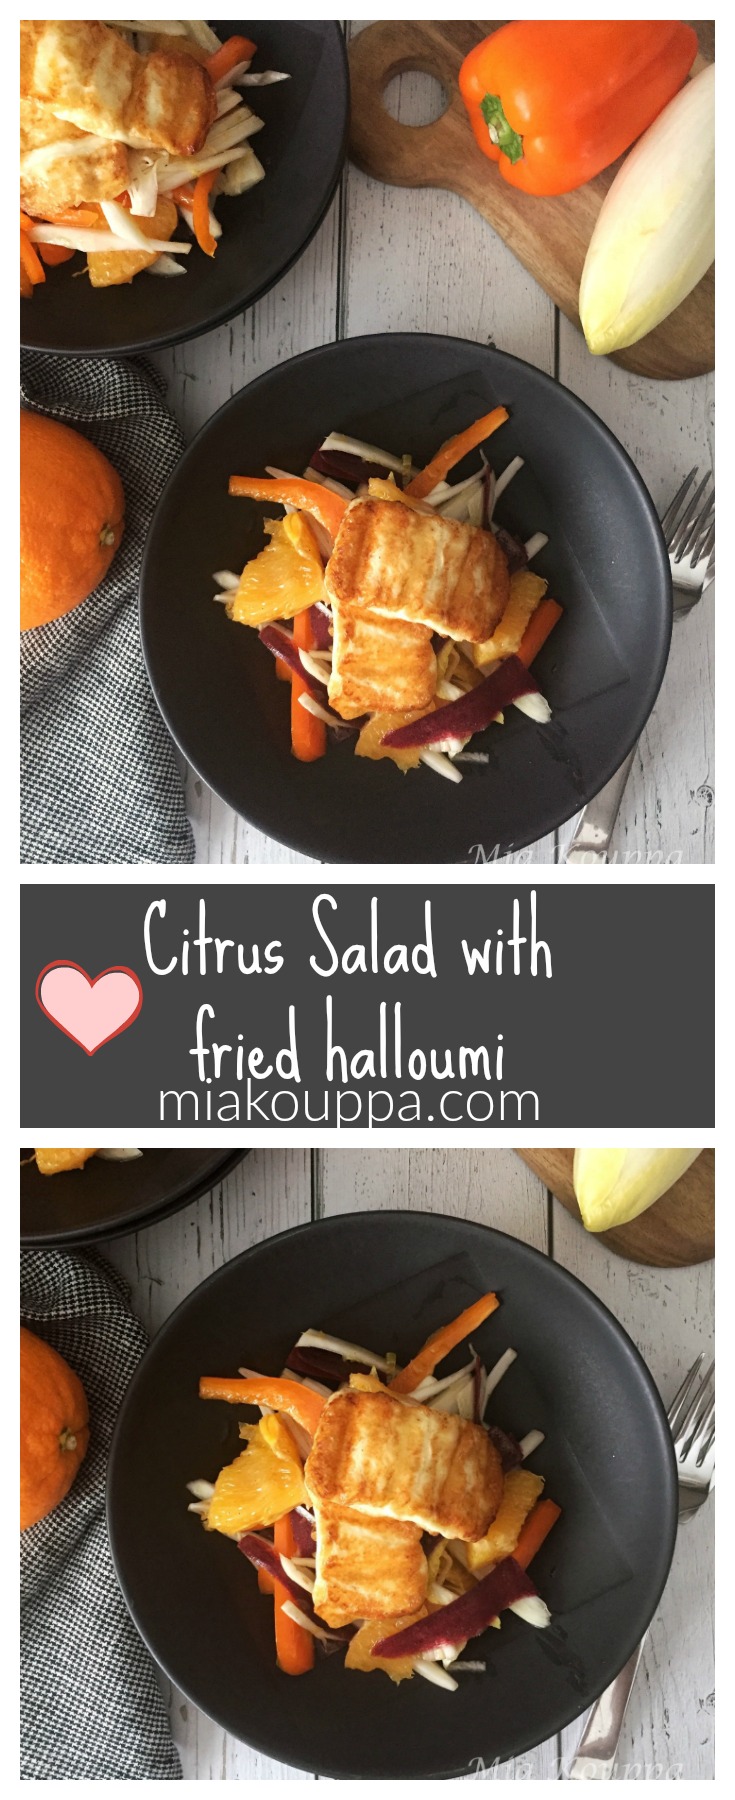 Citrus salad with fried halloumi